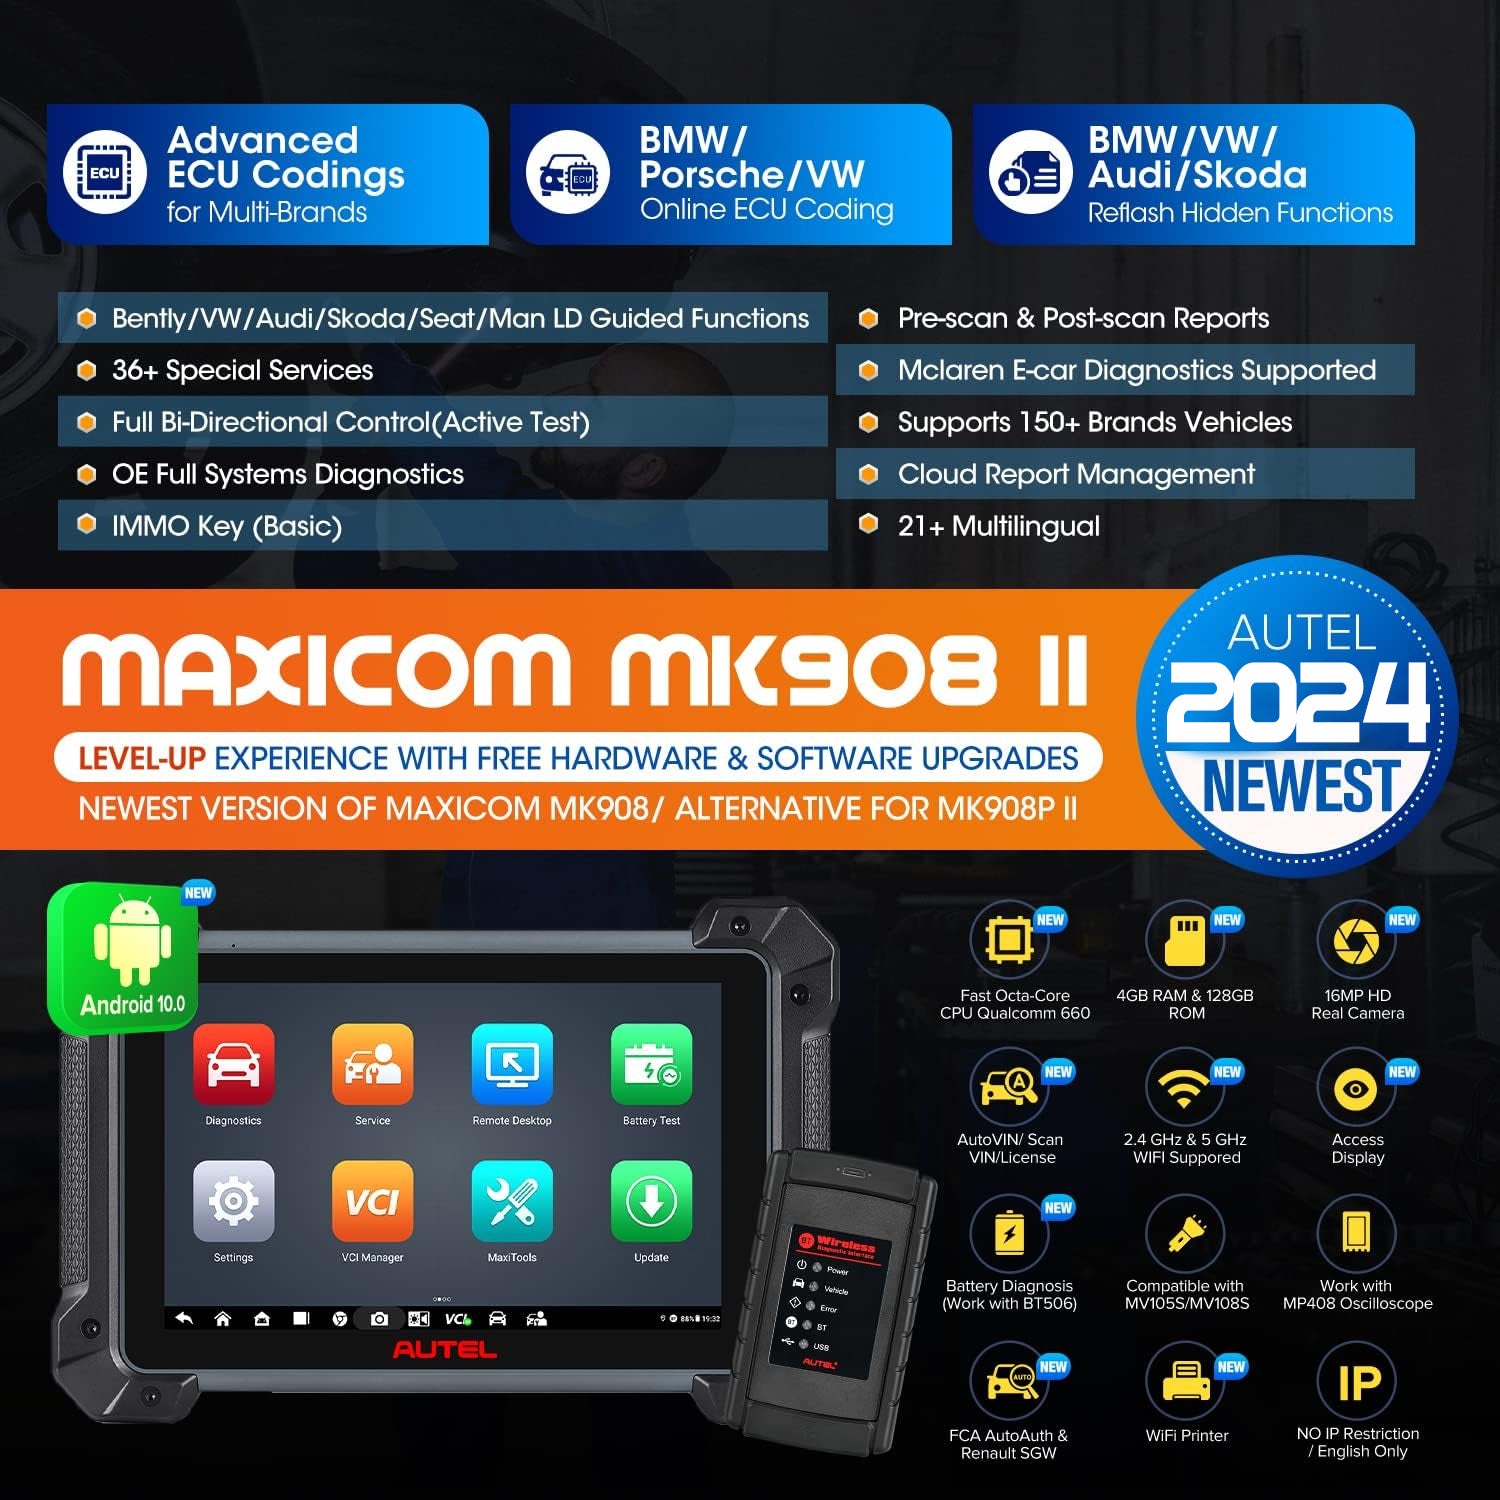 Autel MaxiCOM MK908 II features